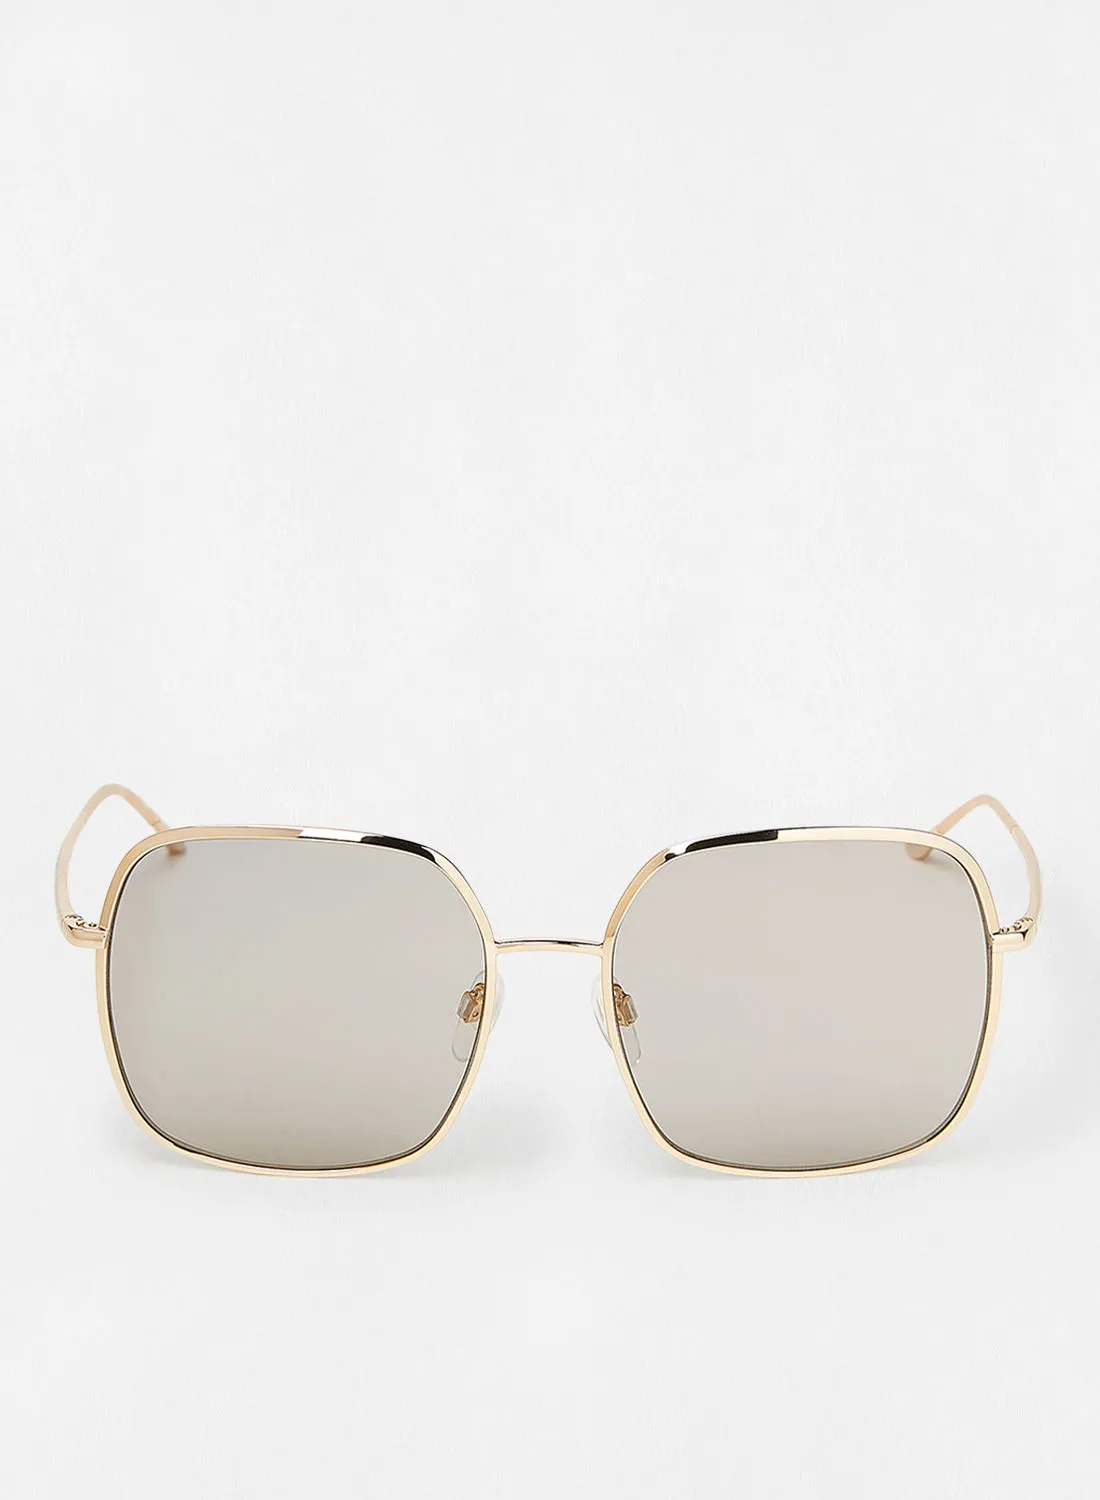 Donna Karan Women's Square Sunglasses